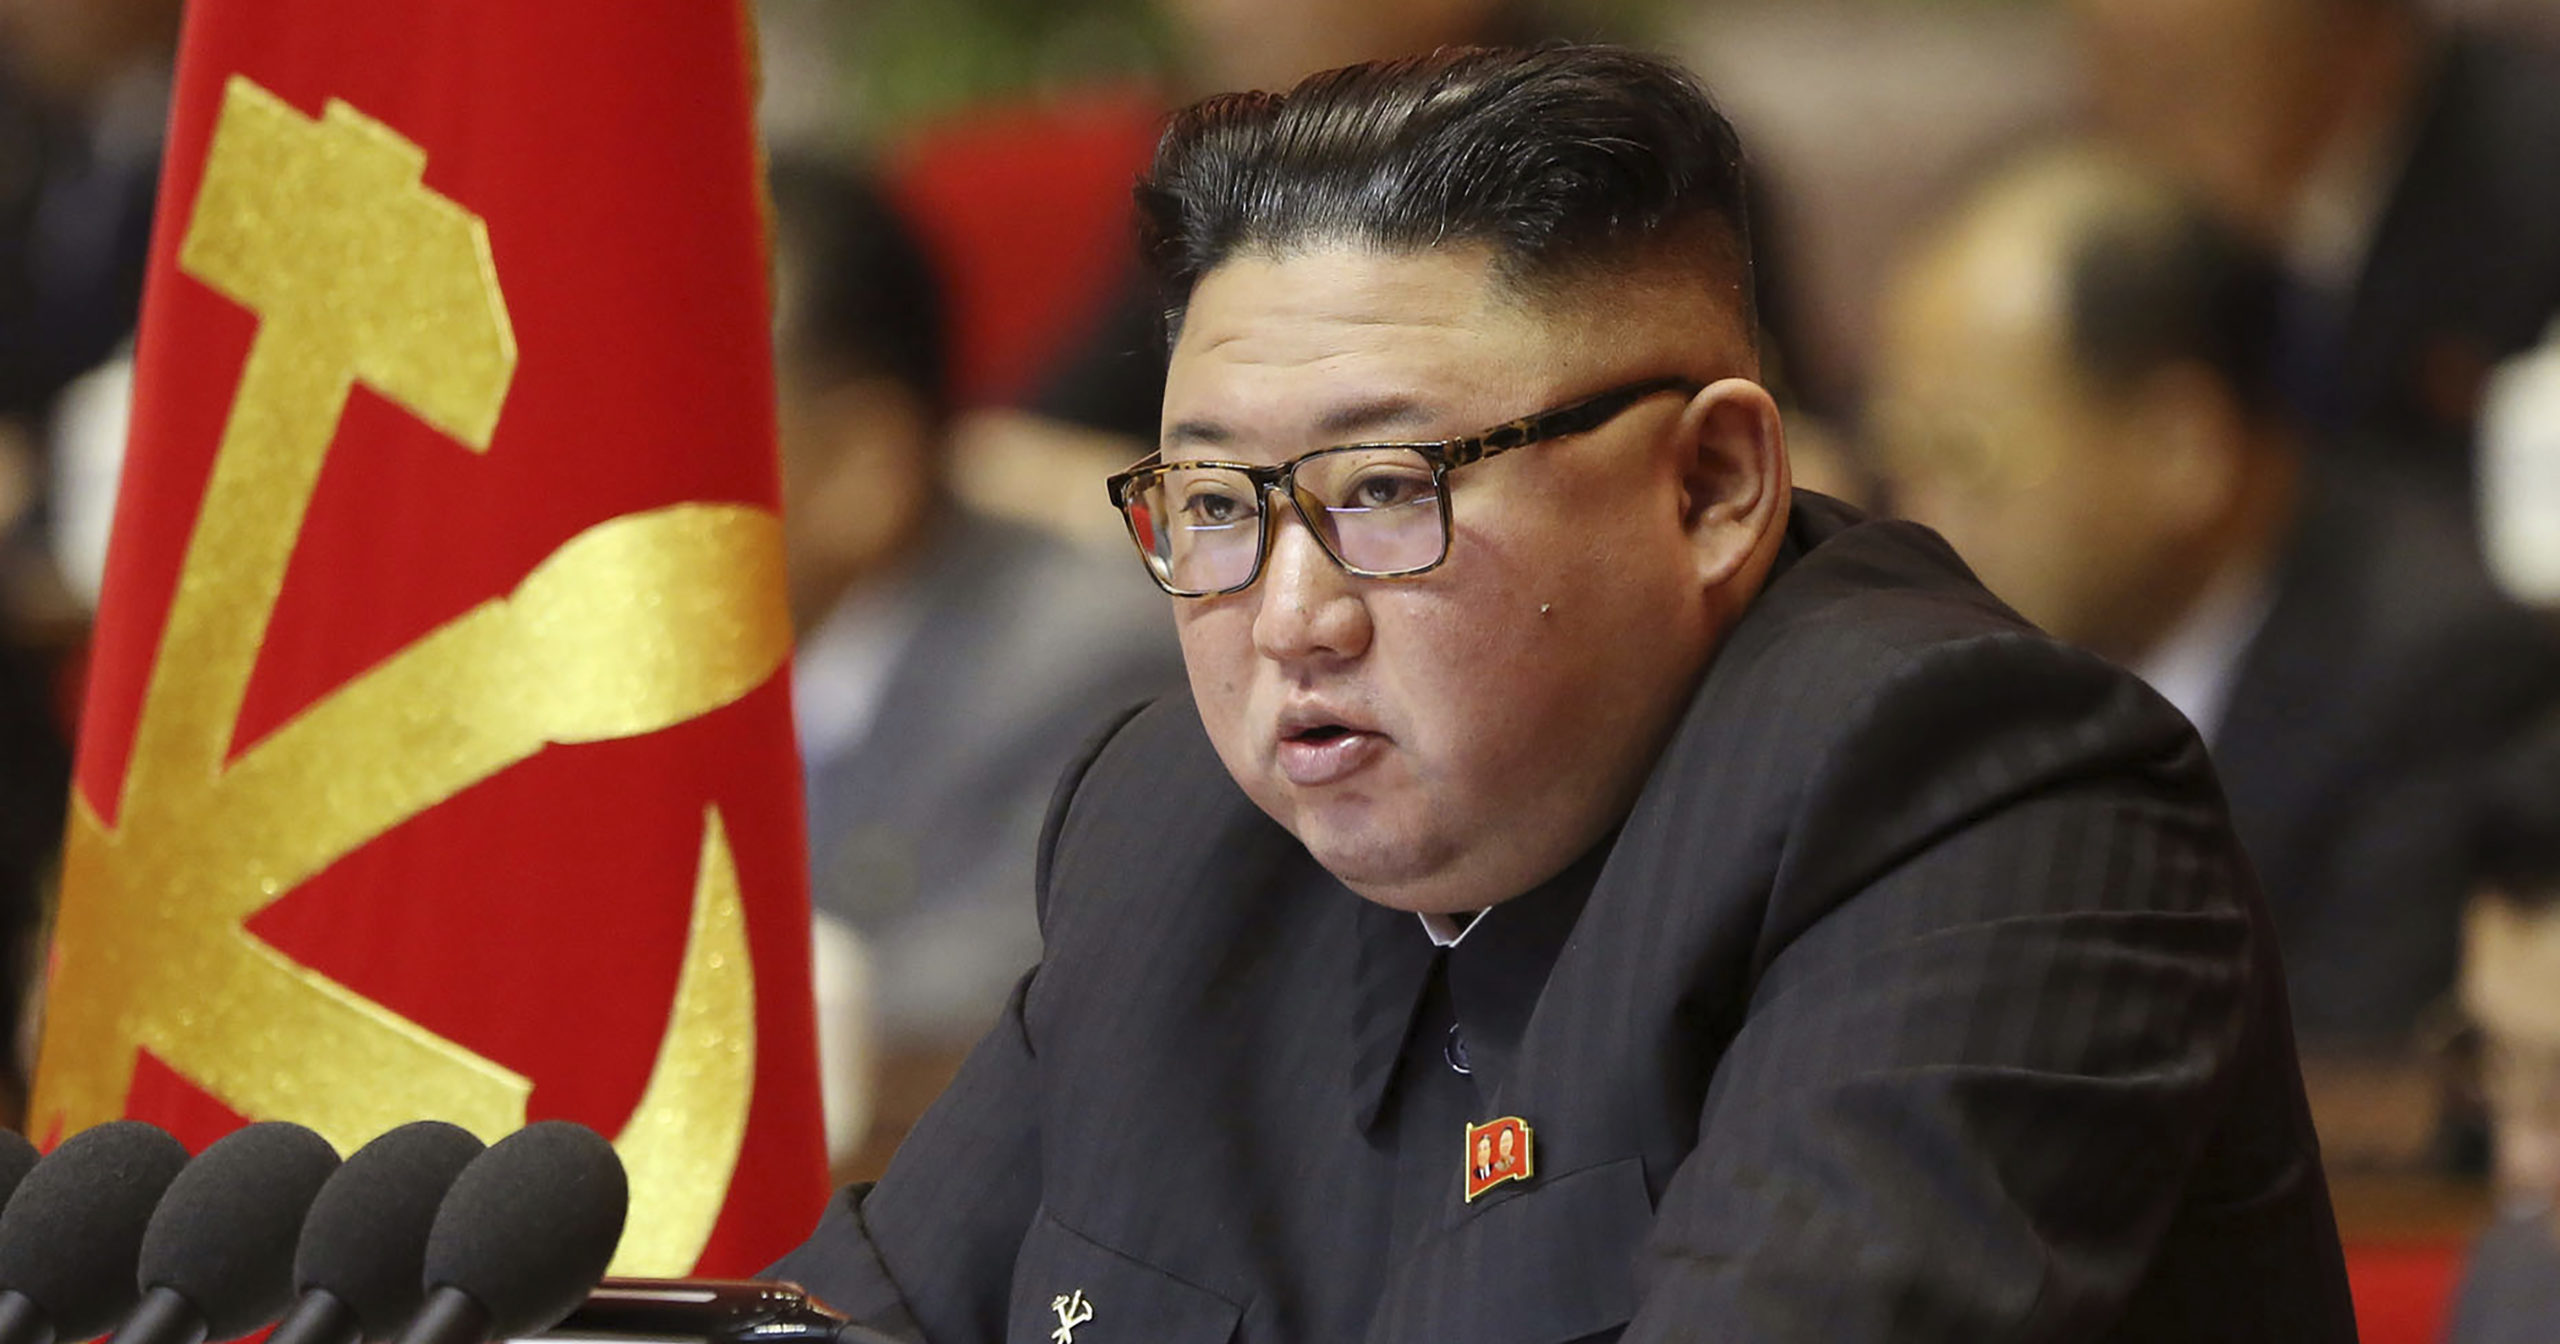 Kim Jong Un attends a ruling party congress in Pyongyang, North Korea, on Jan. 6, 2021.